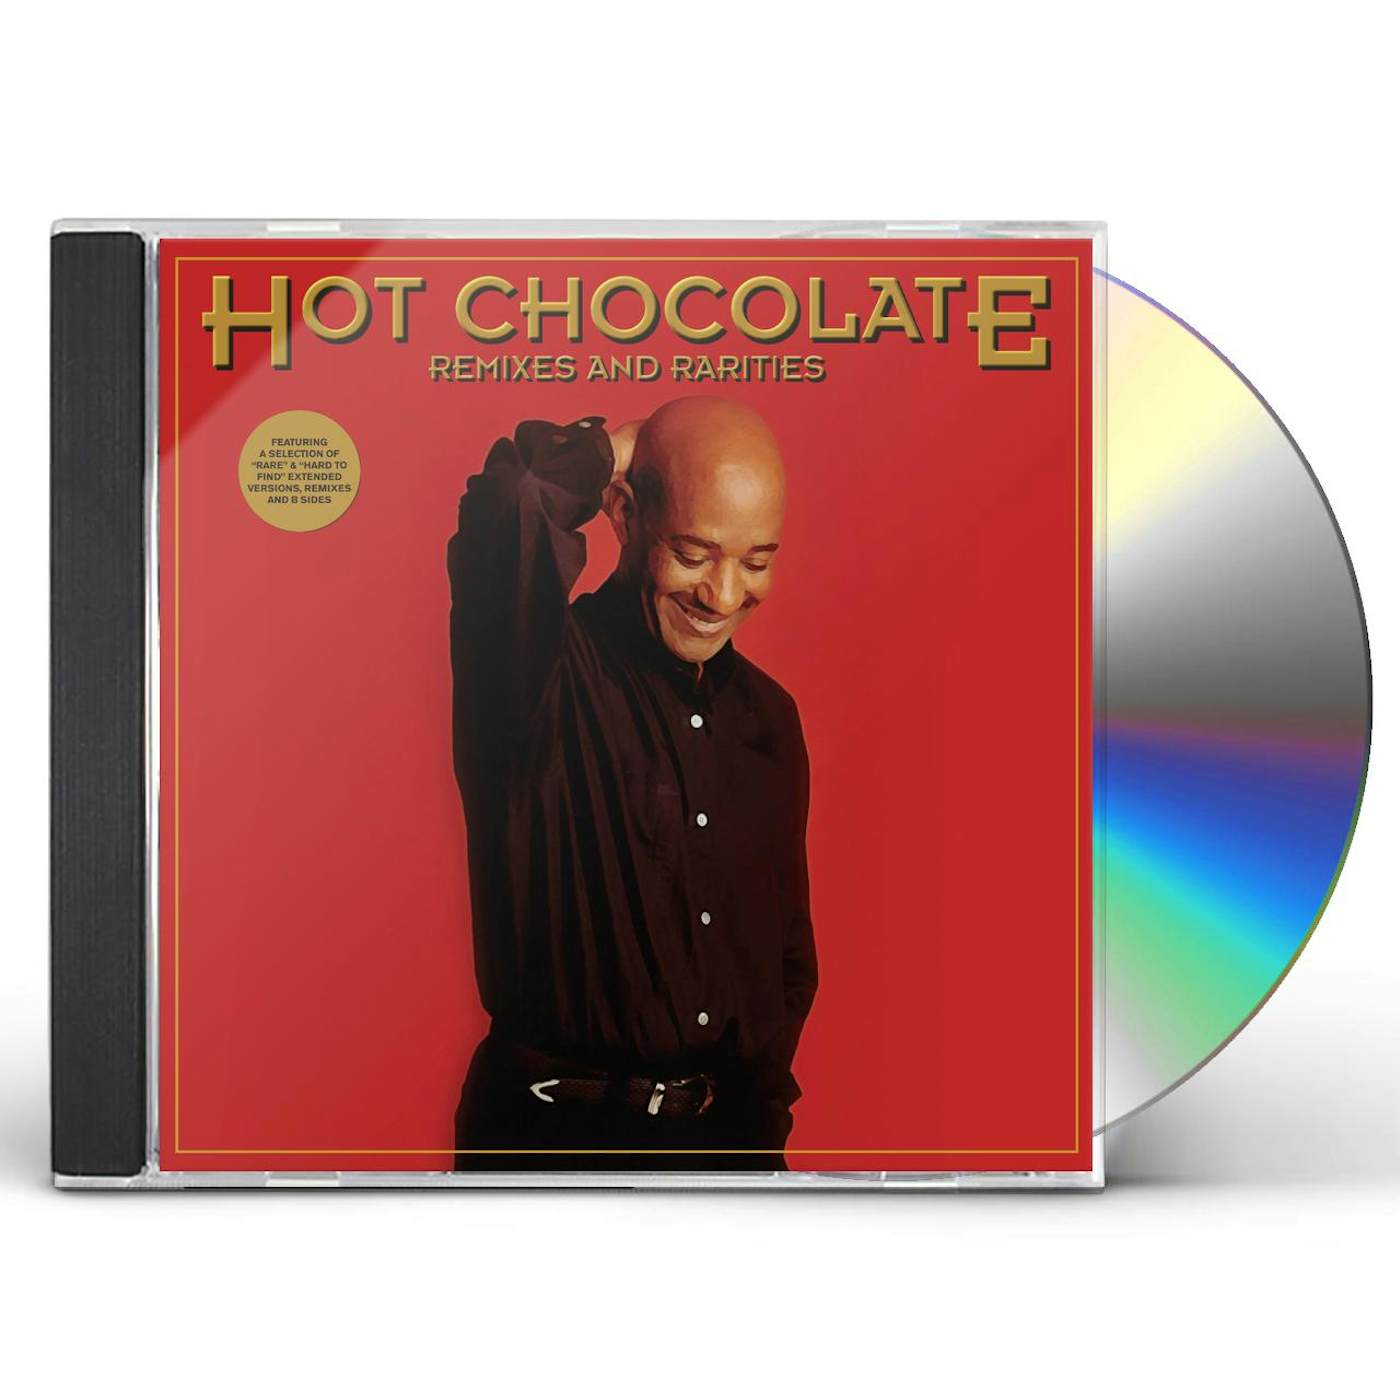 Hot Chocolate Remixes And Rarities: Deluxe 3 Cd Digipak CD